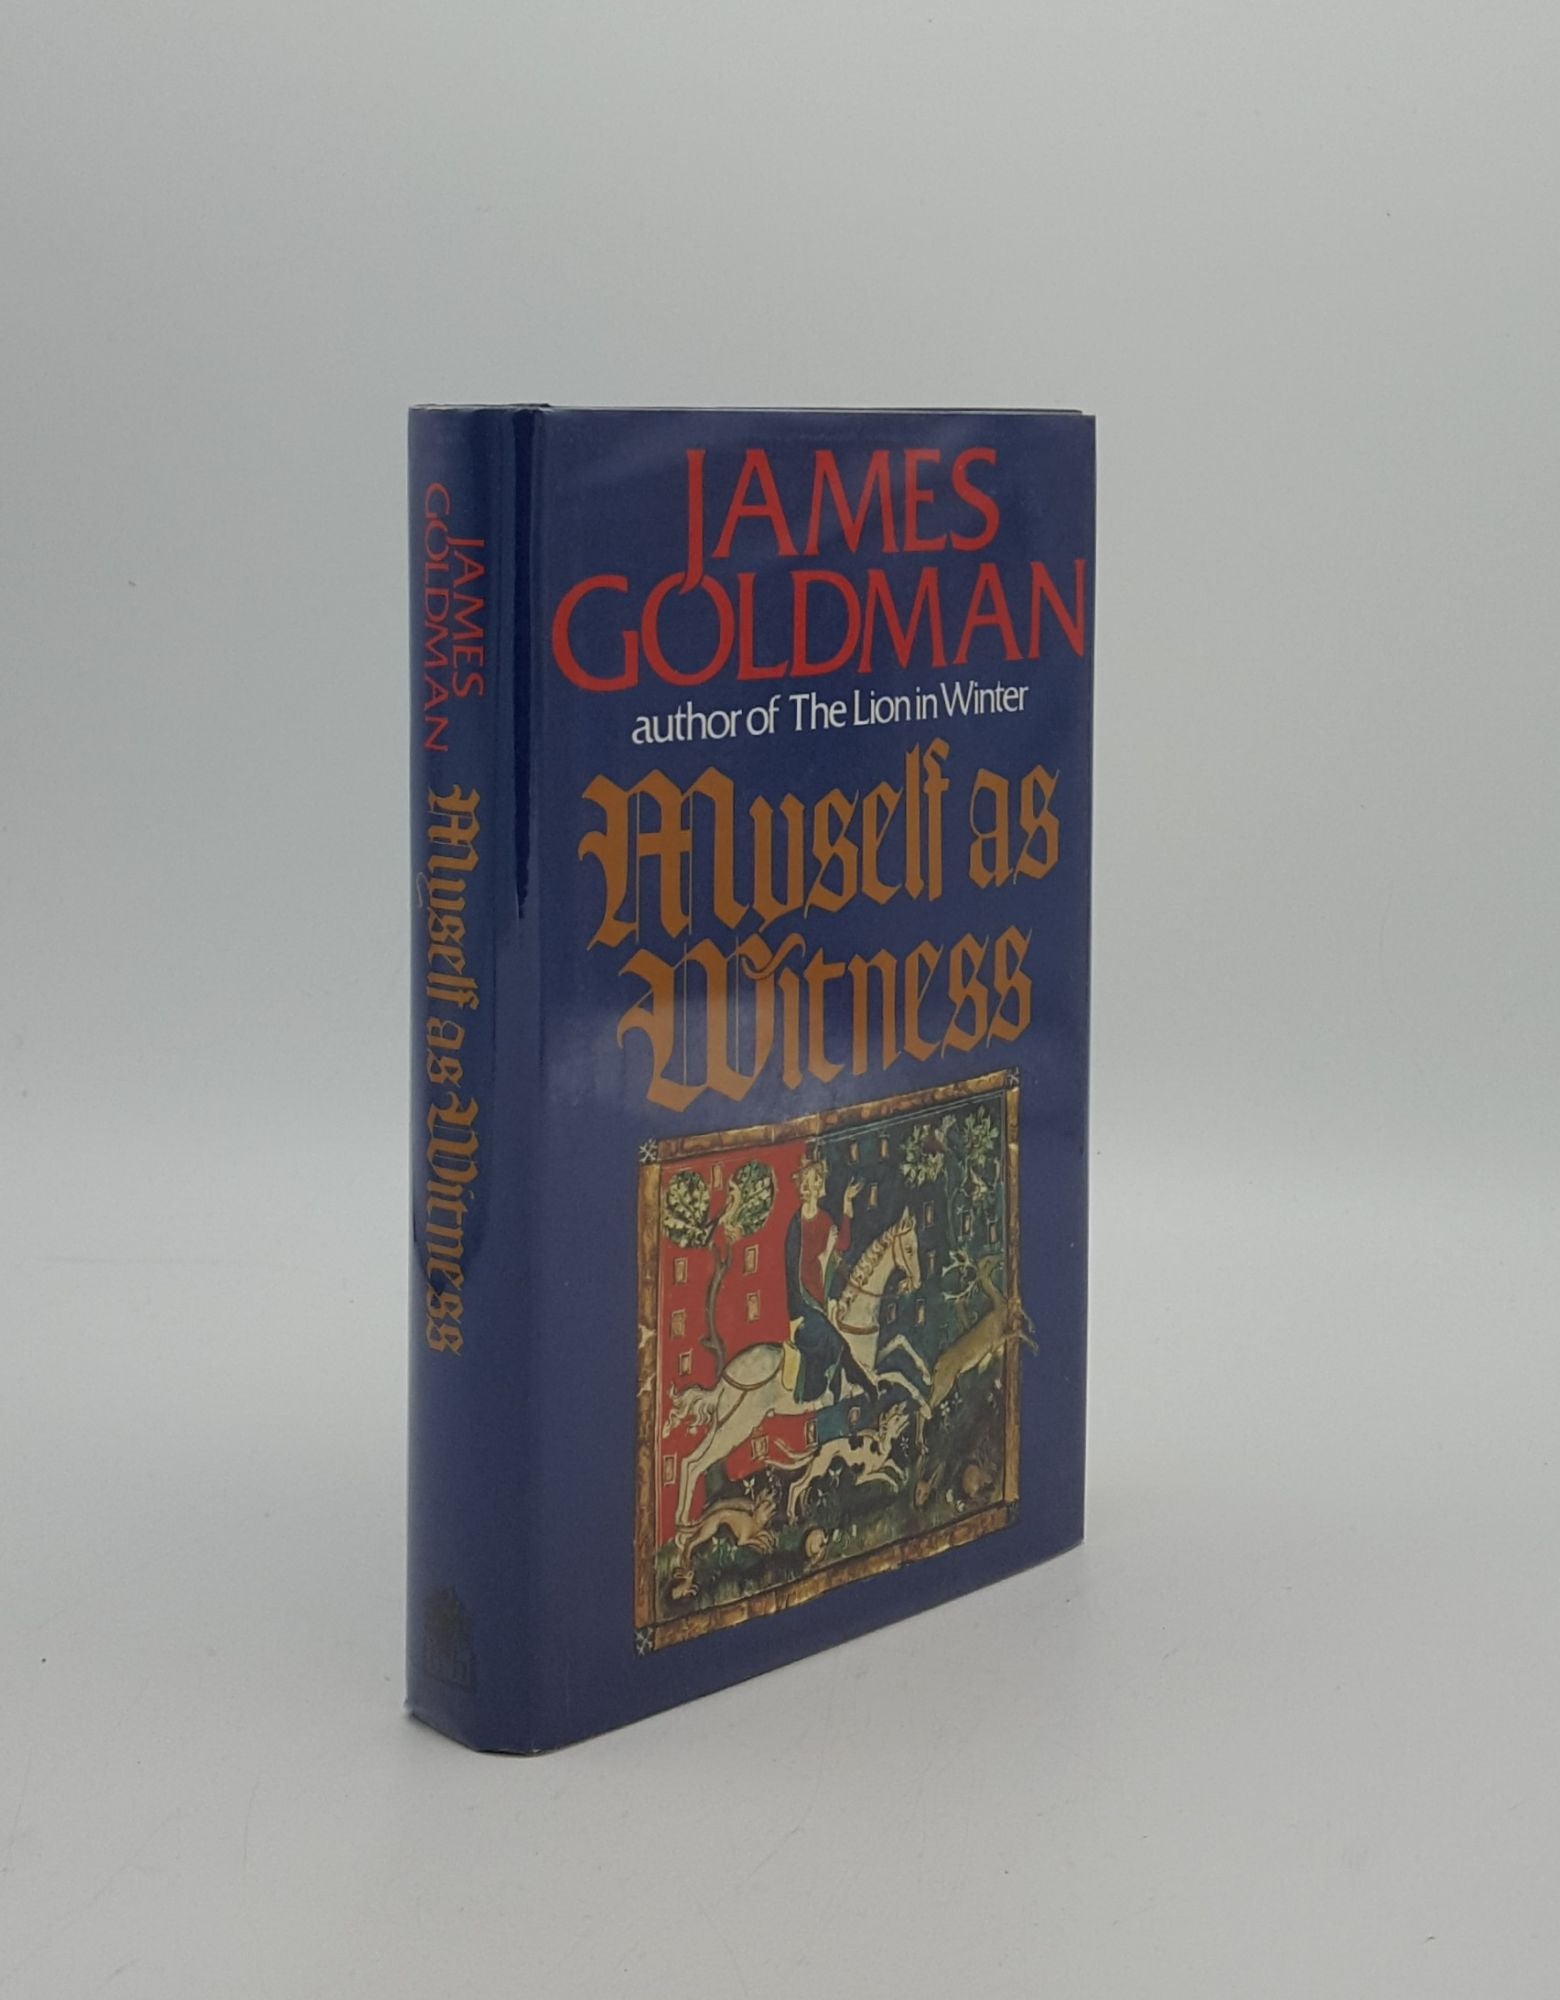 GOLDMAN James - Myself As Witness